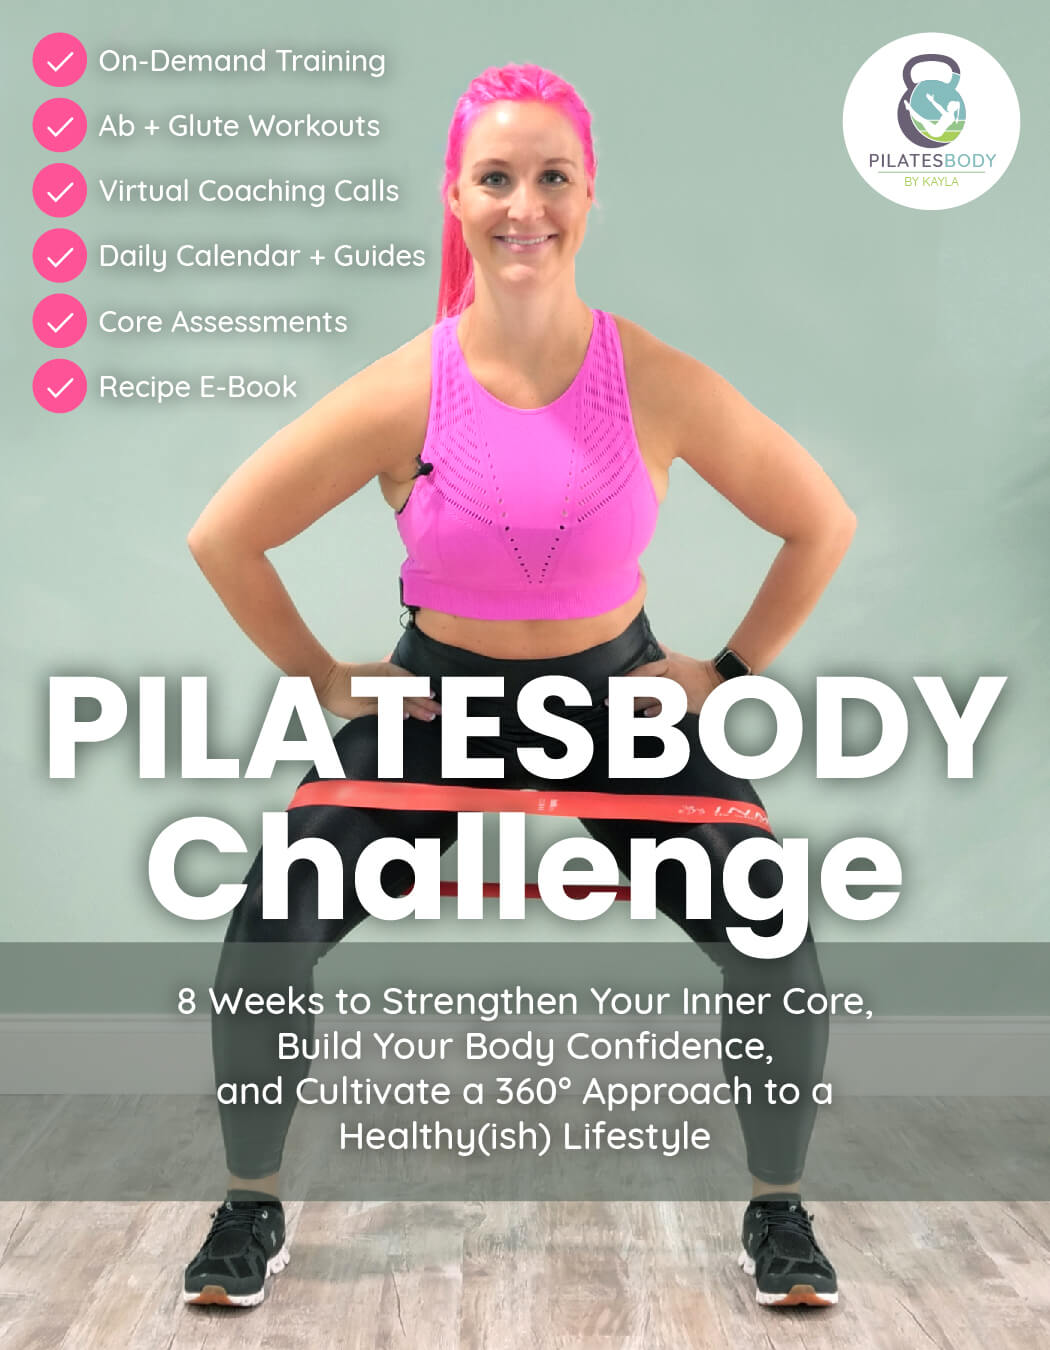 PILATESBODY-Challenge-PILATESBODY-by-Kayla-8-week-on-demand-pilates-program-long-lake-minnesota-minneapolis